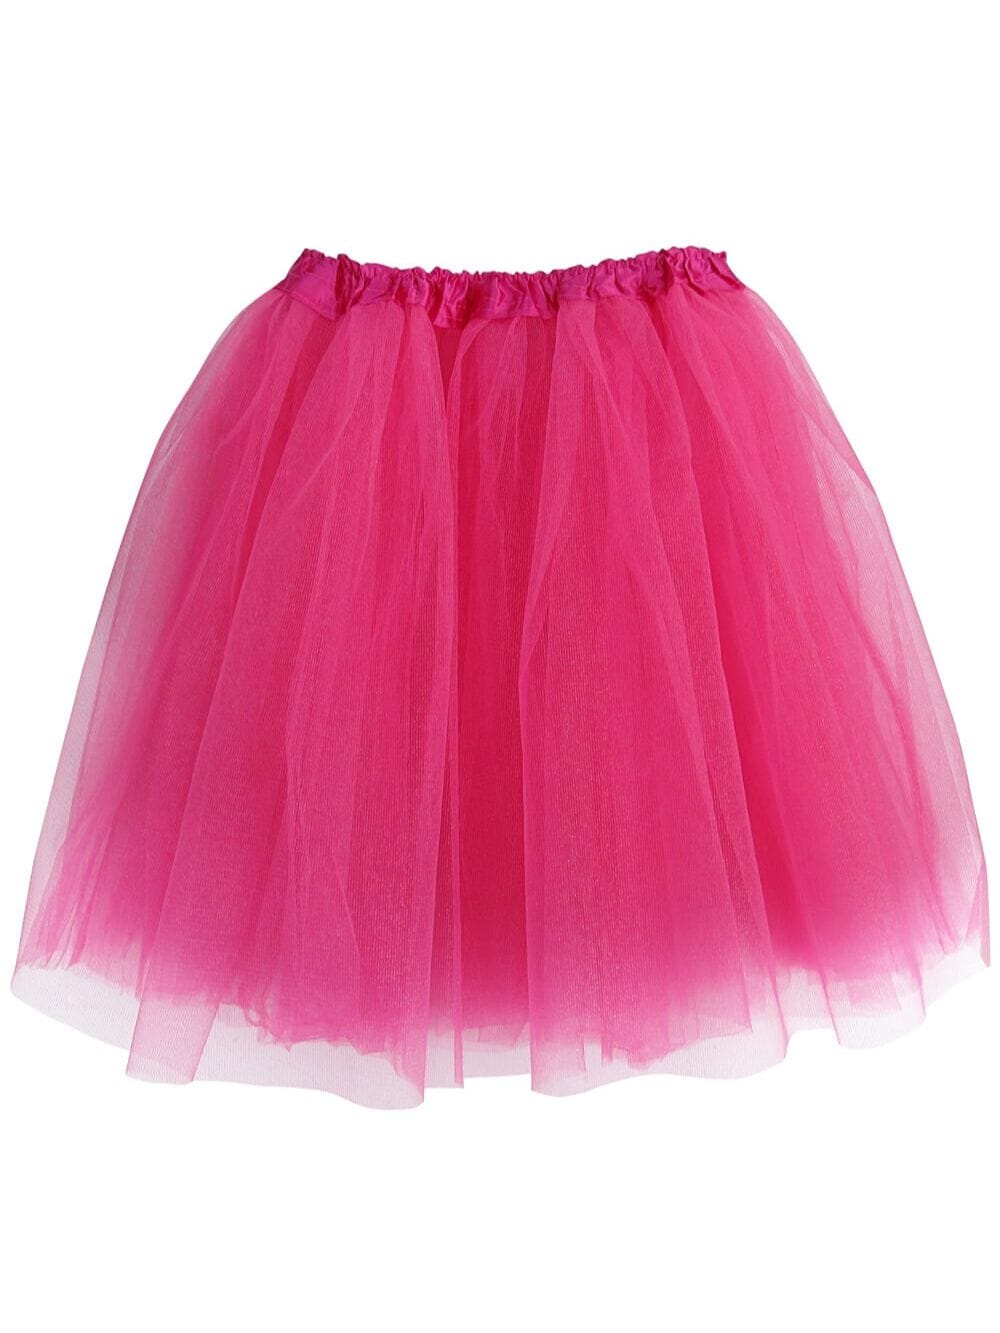 Hot Pink Tutu Skirt for Adult - Women's Size 3-Layer Basic Ballet Costume Dance Tutus - Sydney So Sweet